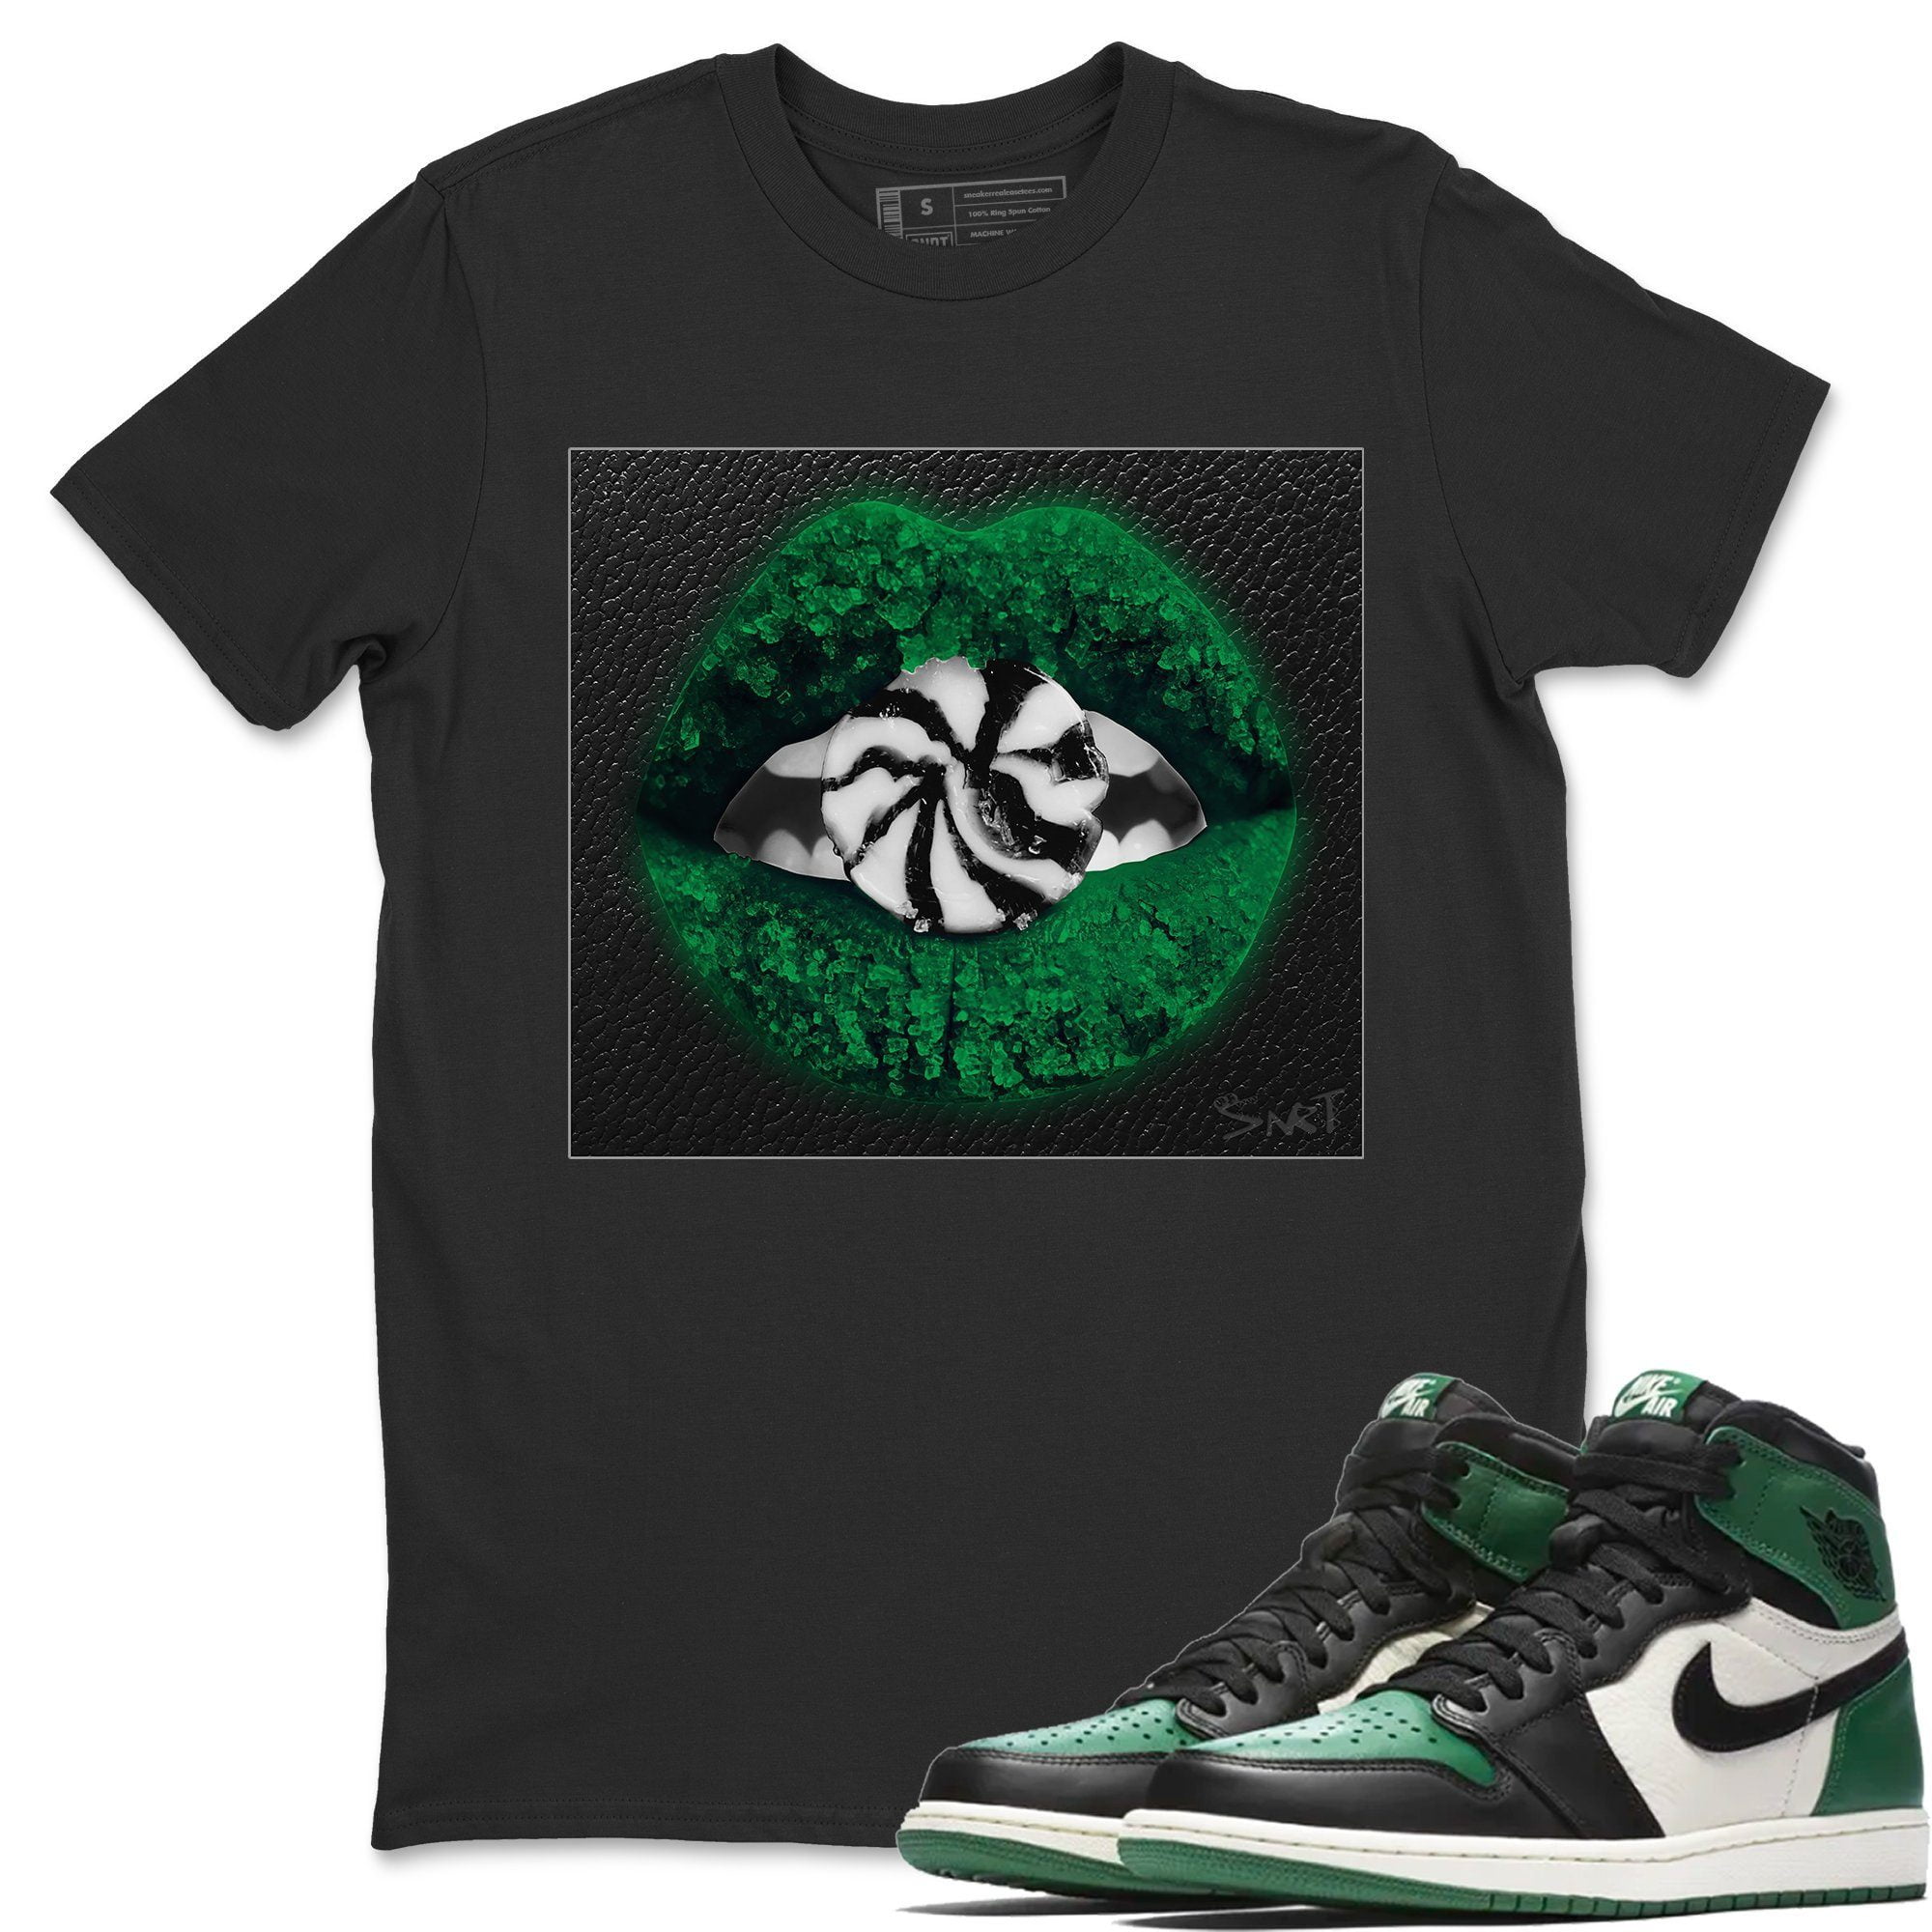 Lips Candy T-Shirt AJ1 Pine Green Kicks Matching Tops - Jordan 1 Sneakers  Outfit (Black / Medium) - Walmart.com